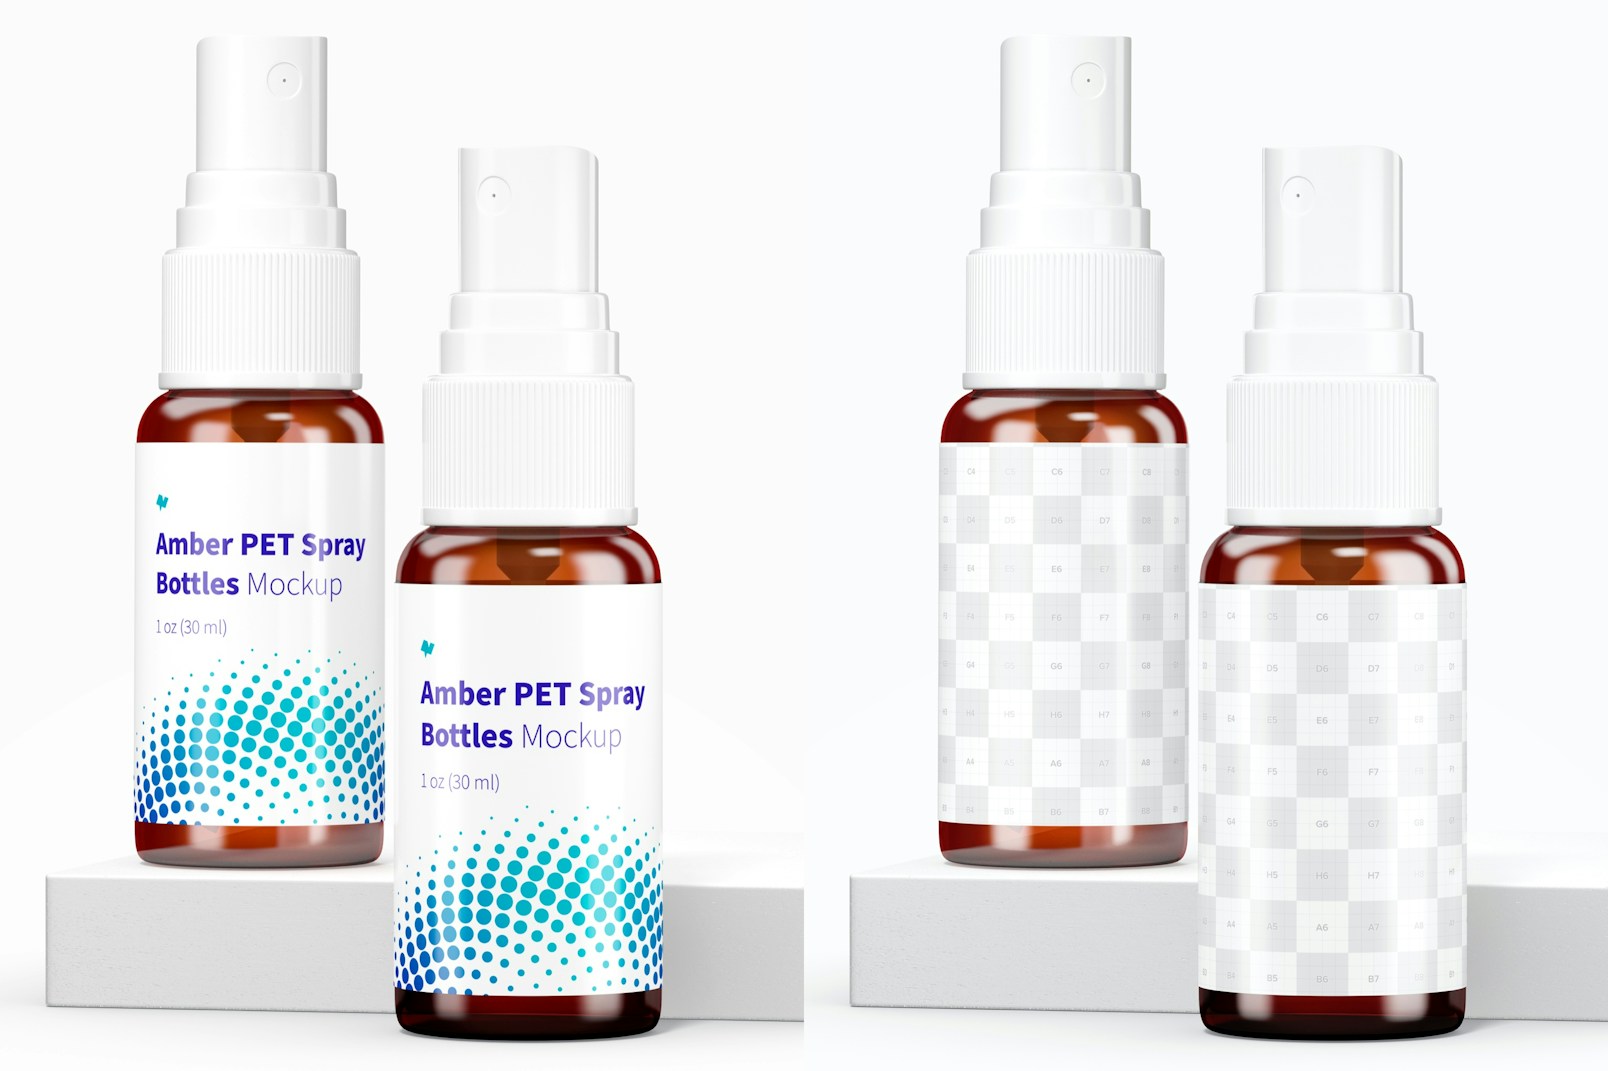 1 oz Amber PET Spray Bottles Mockup, Front View